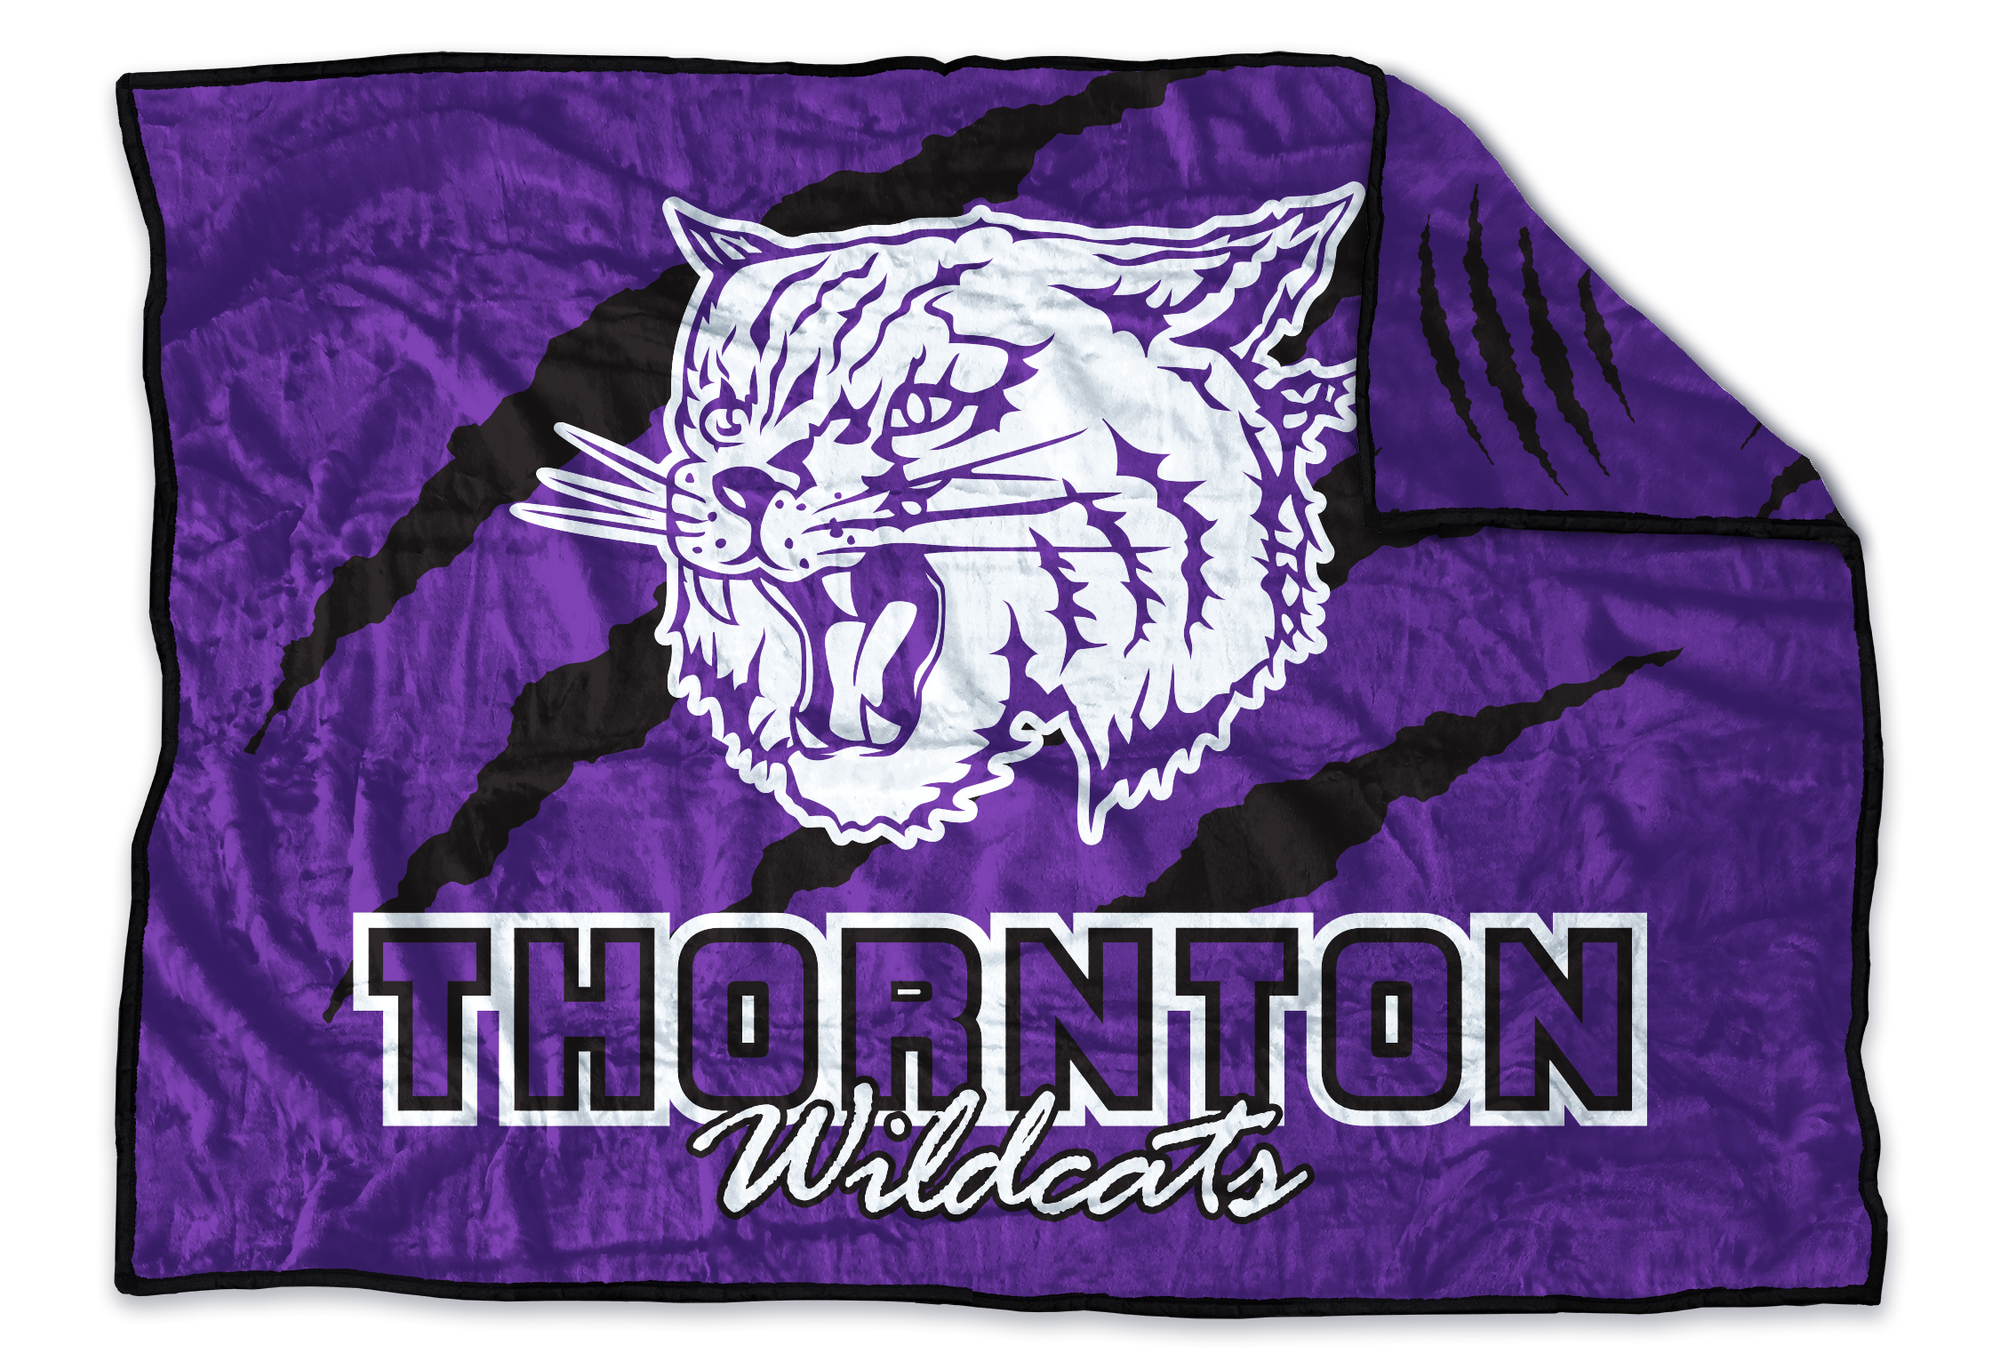 Thornton Township Wildcats